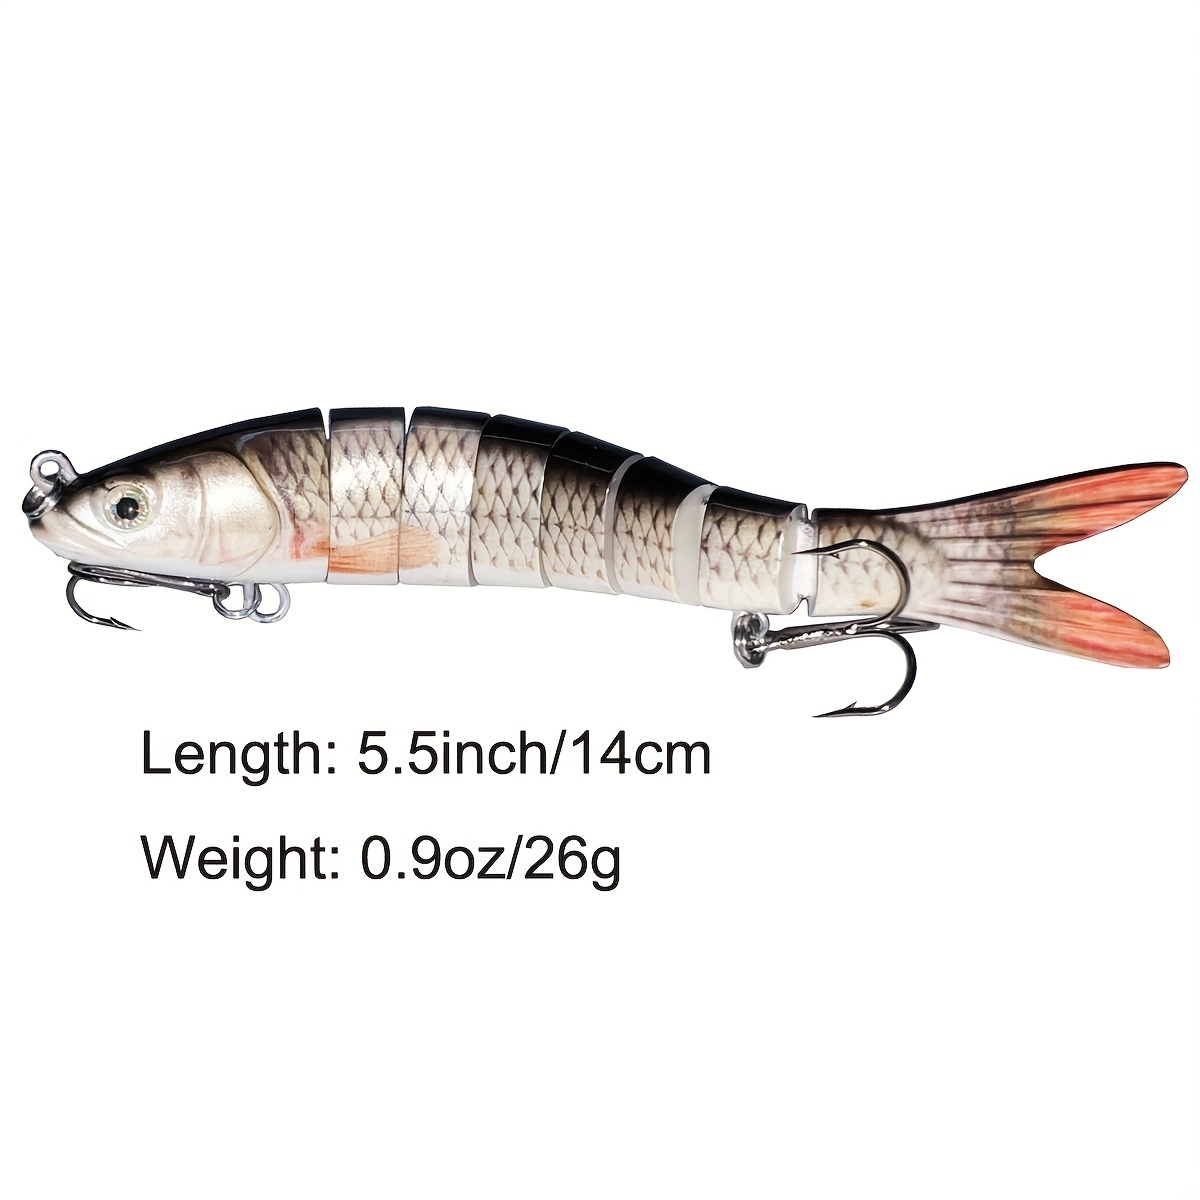 5PCS/SET JOINTED FISHING Lures 13.7cm/27g Wobblers Swimbait Hard Bait  8-Segment $21.99 - PicClick AU